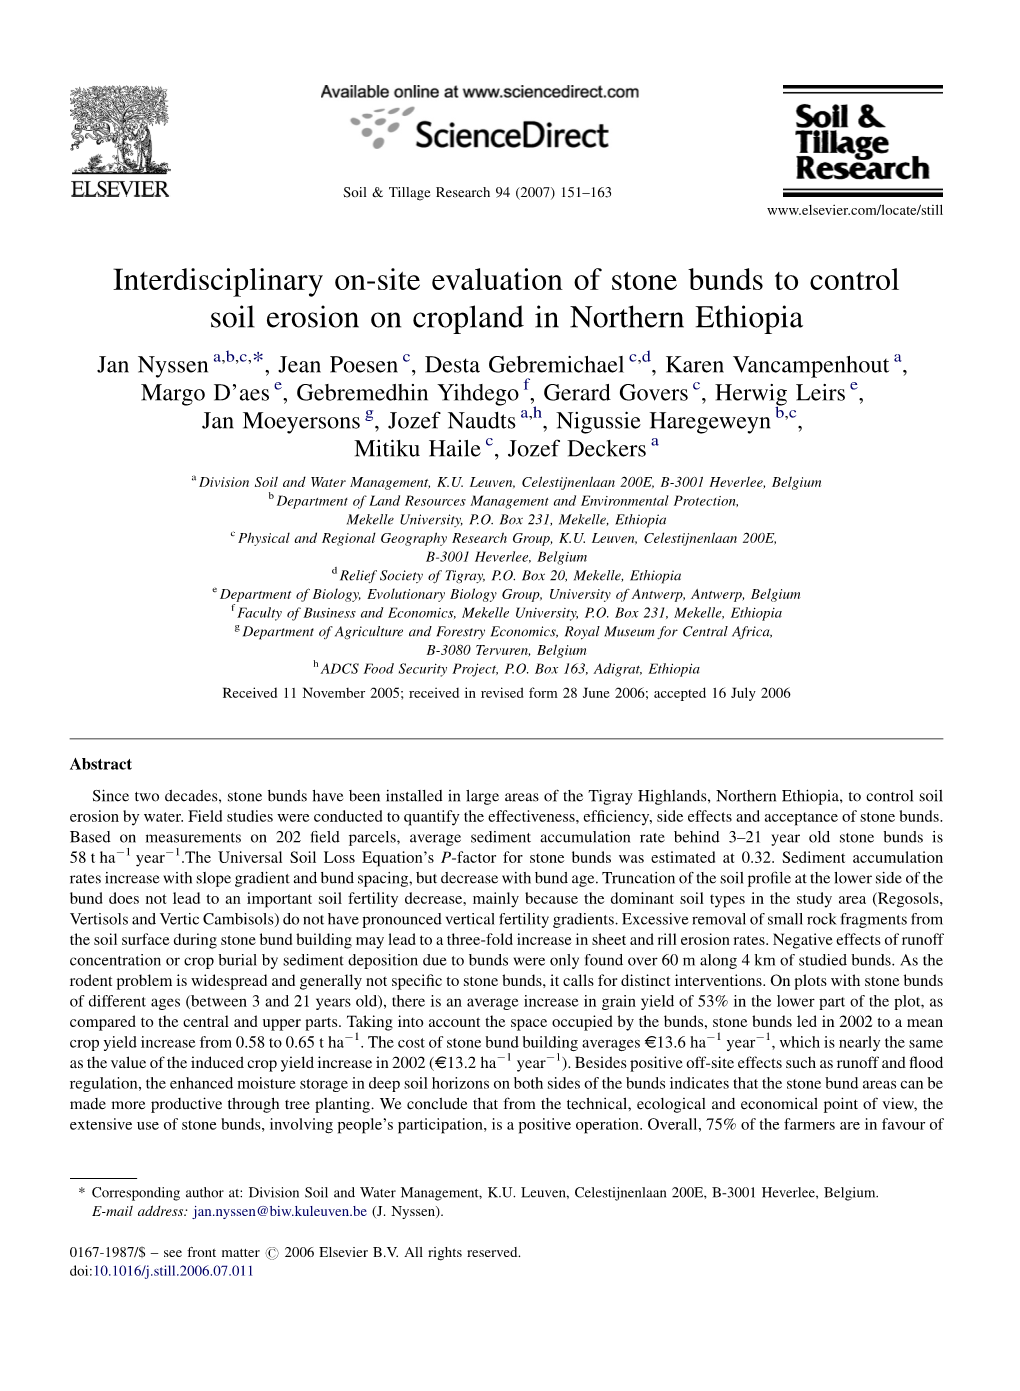 Interdisciplinary On-Site Evaluation of Stone Bunds to Control Soil Erosion